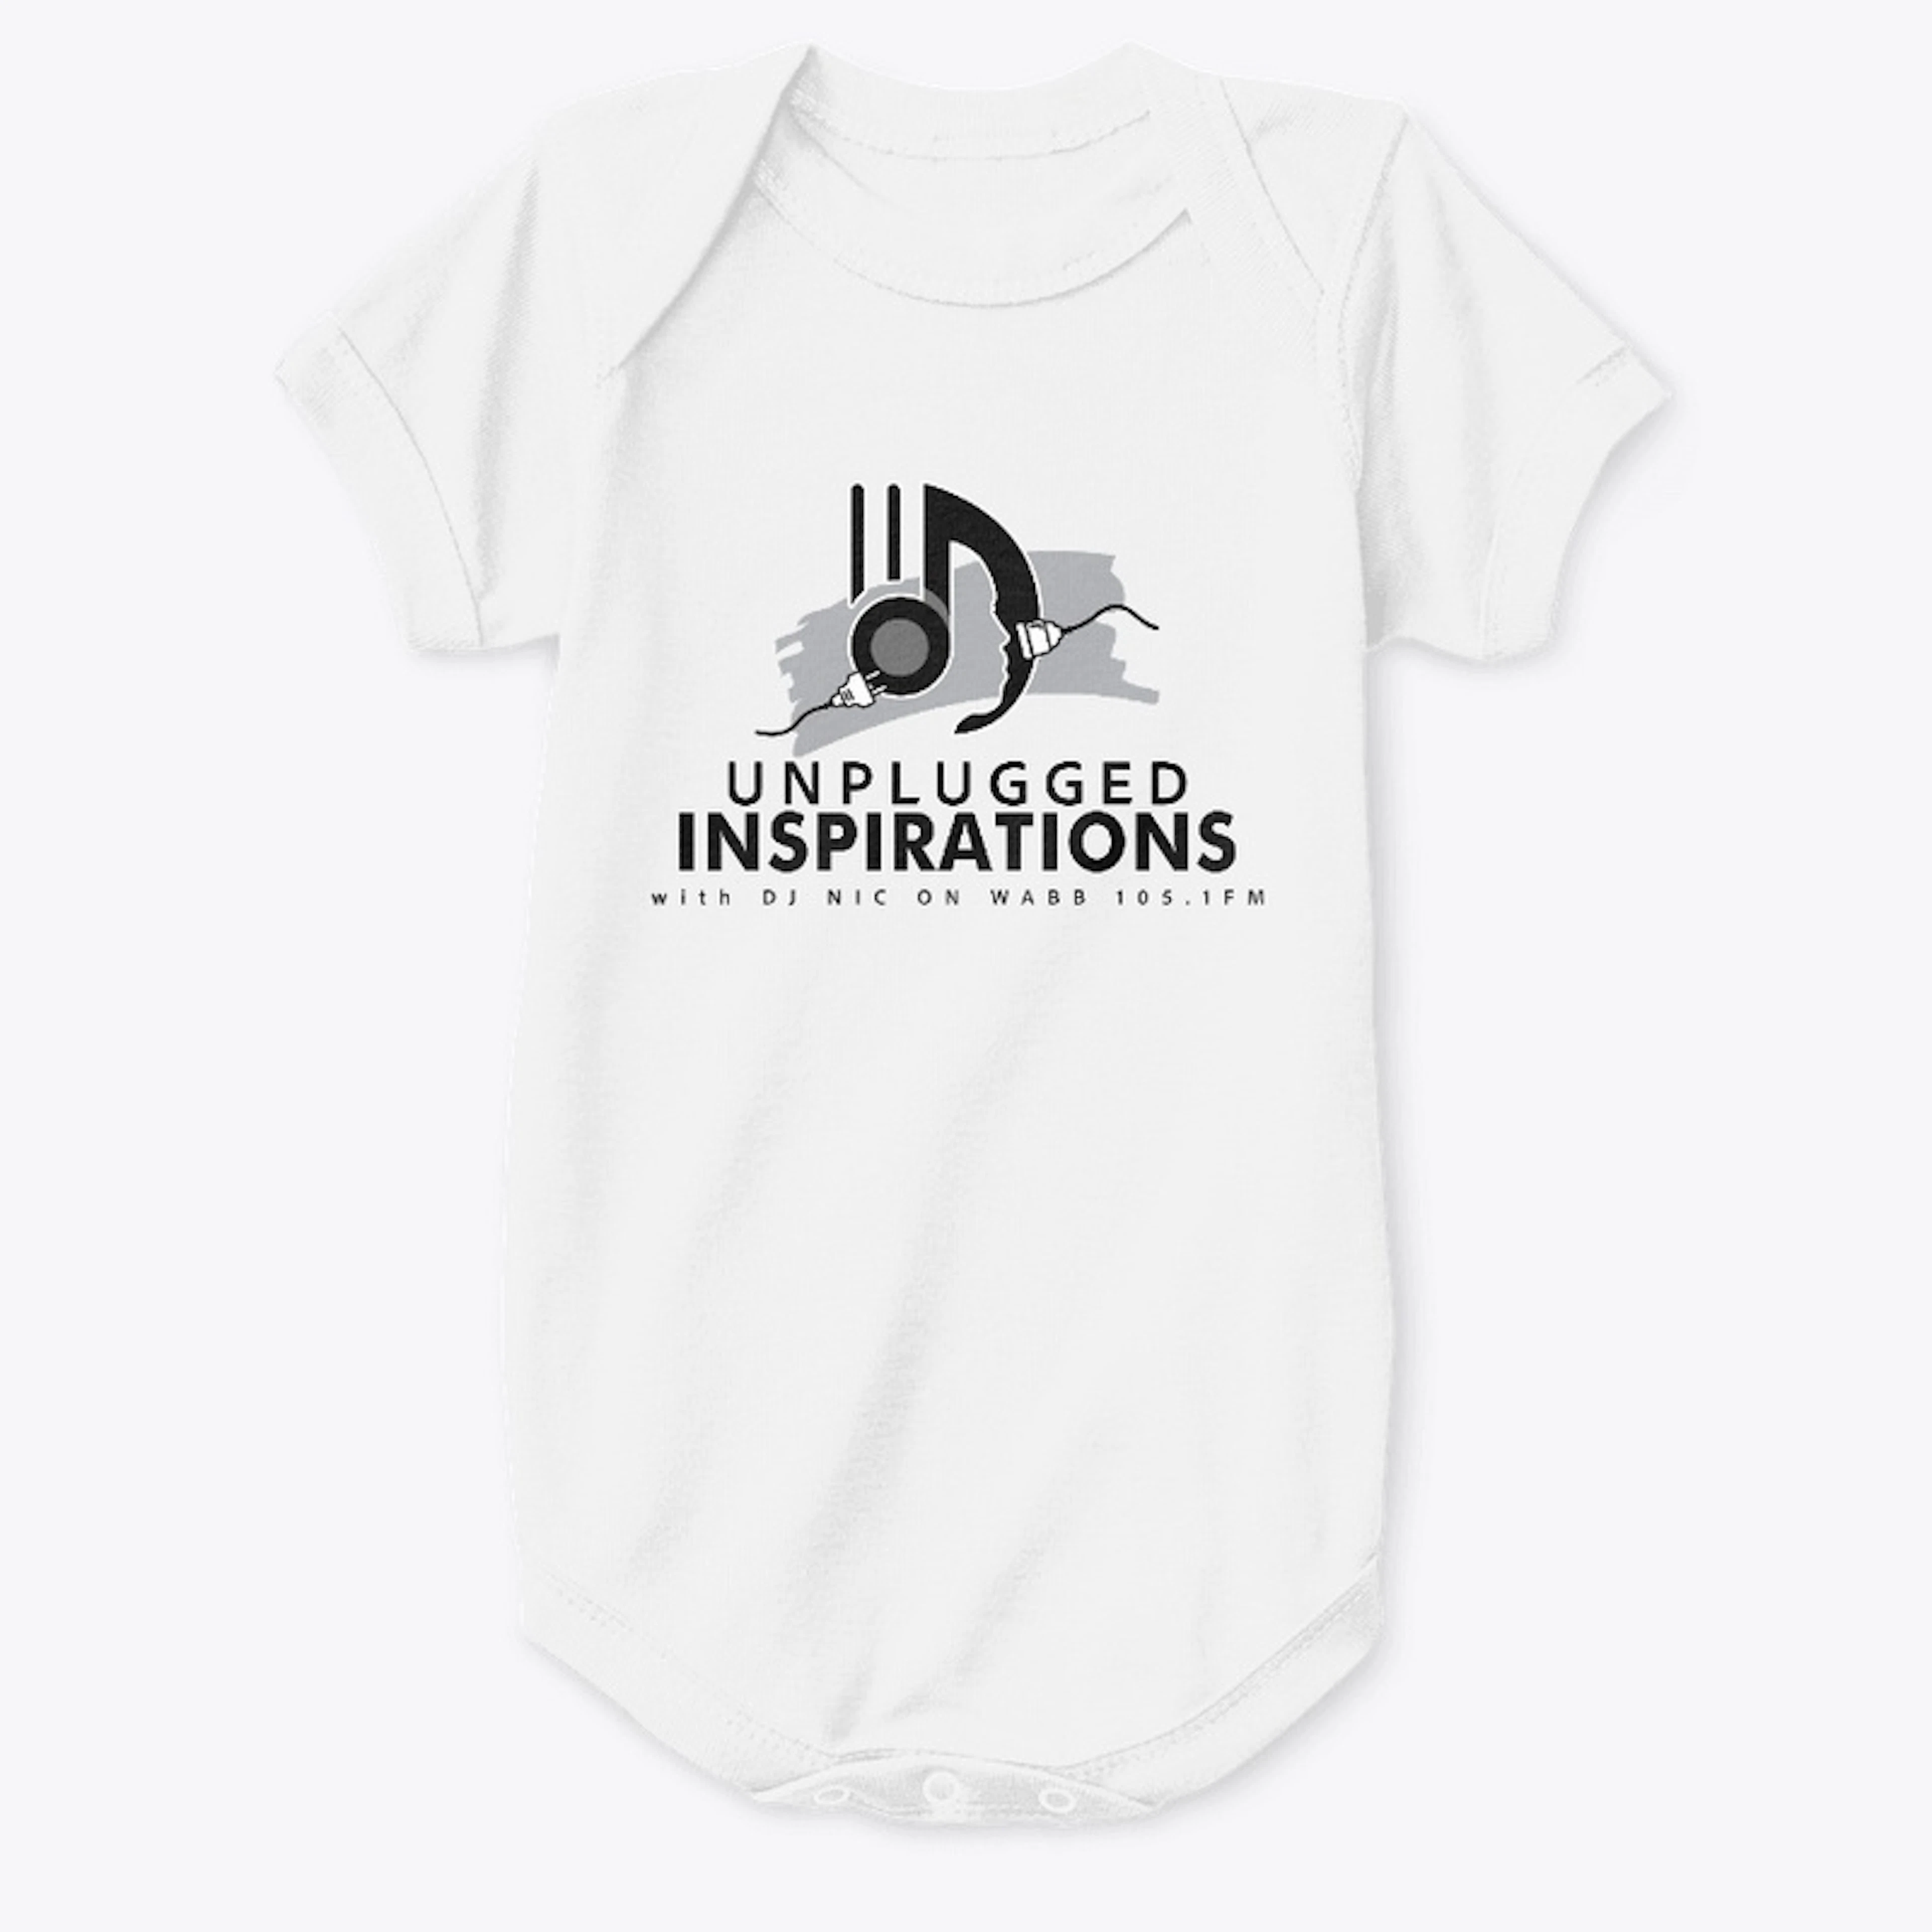 Unplugged Inspiration's